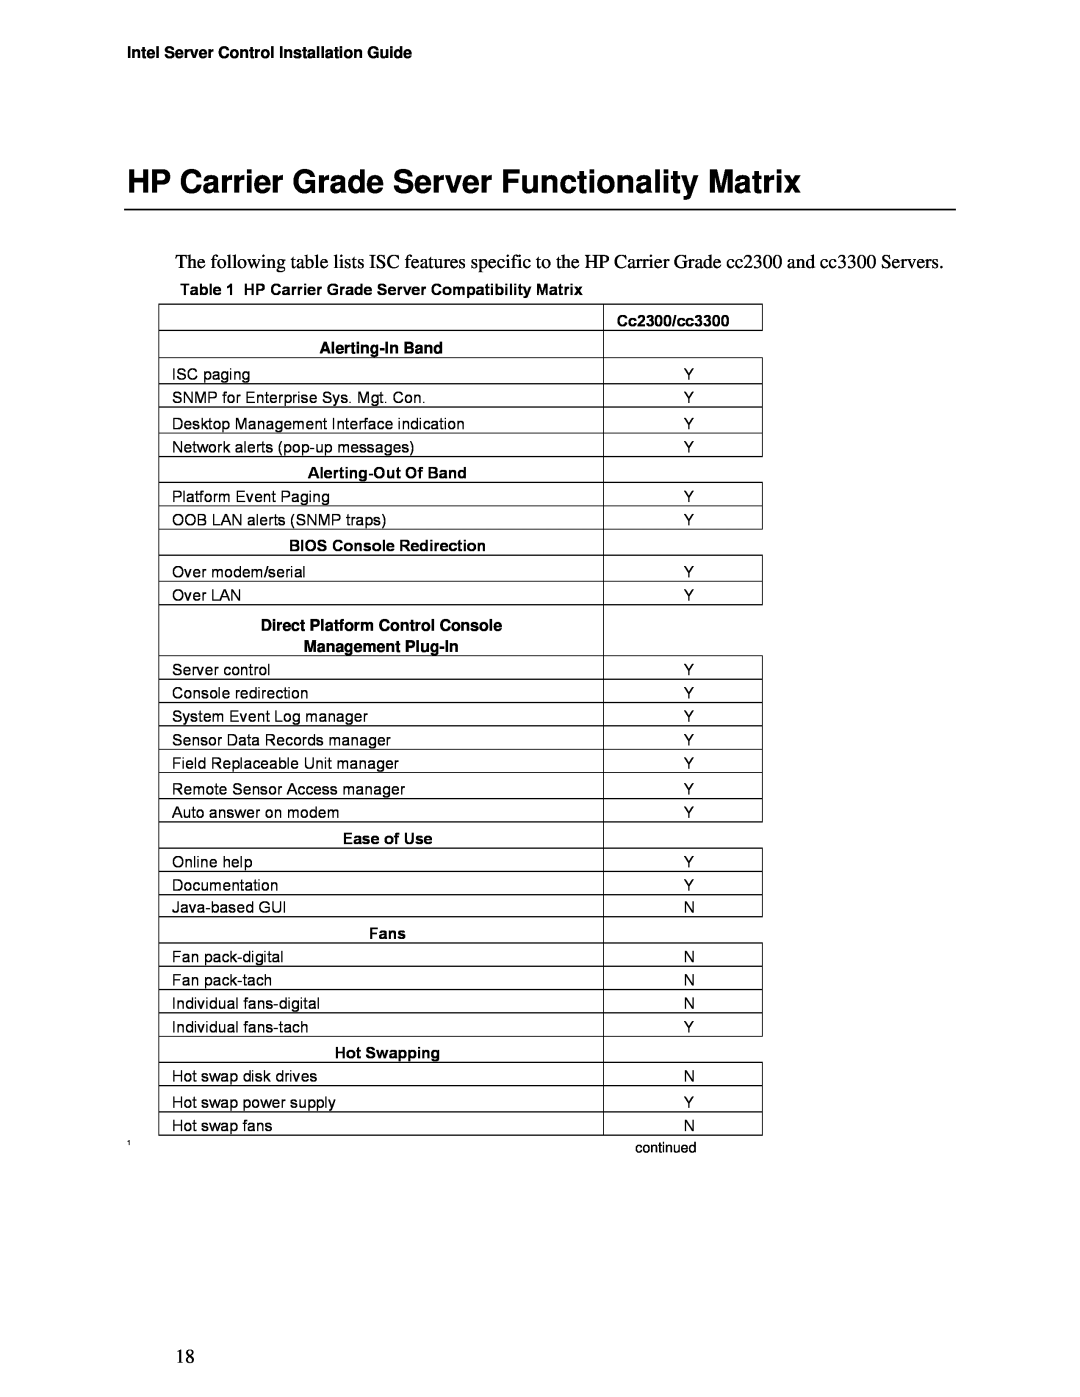 Intel cc3300, cc2300 manual HP Carrier Grade Server Functionality Matrix 